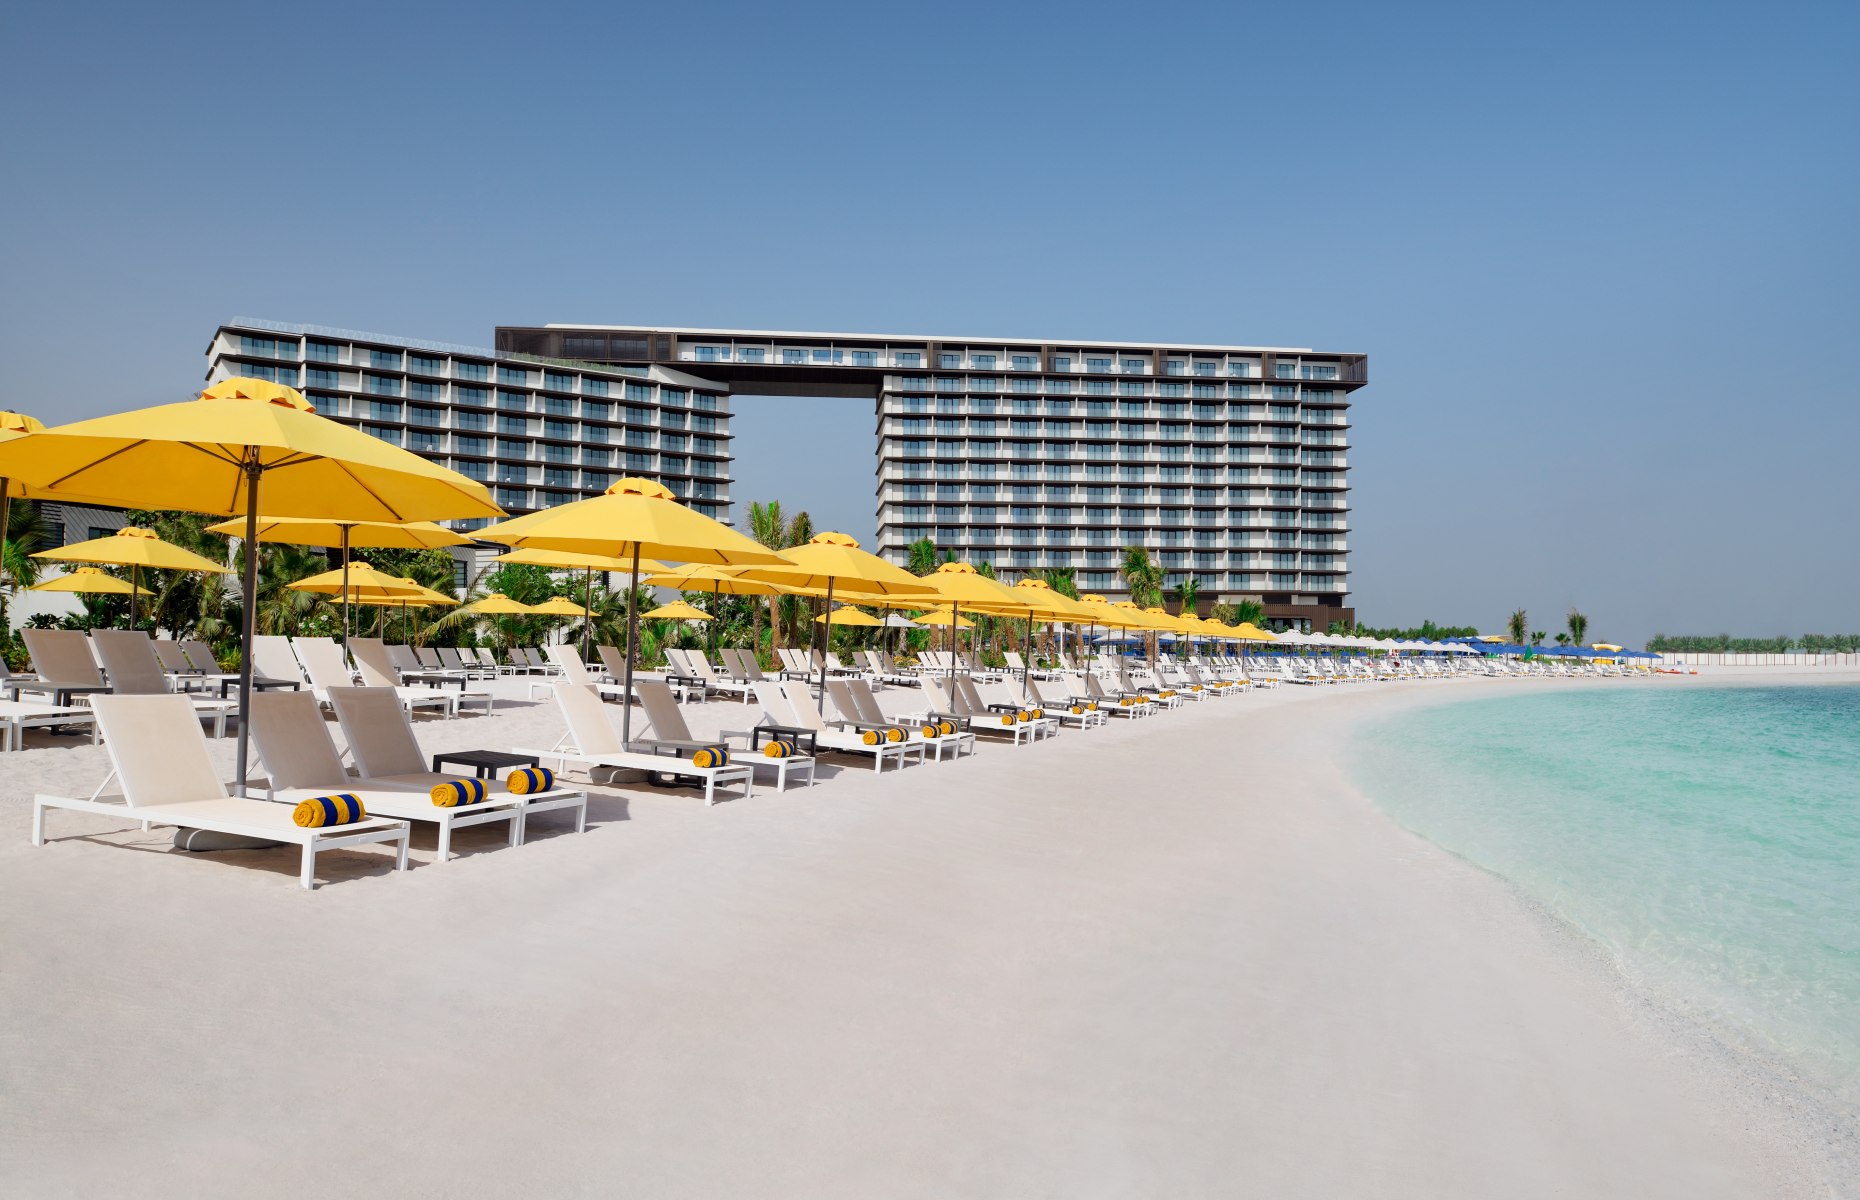 Movenpick Resort Al Marjan Island, Ras Al Khaimah, UAE (Image: Visit Ras Al Khaimah)